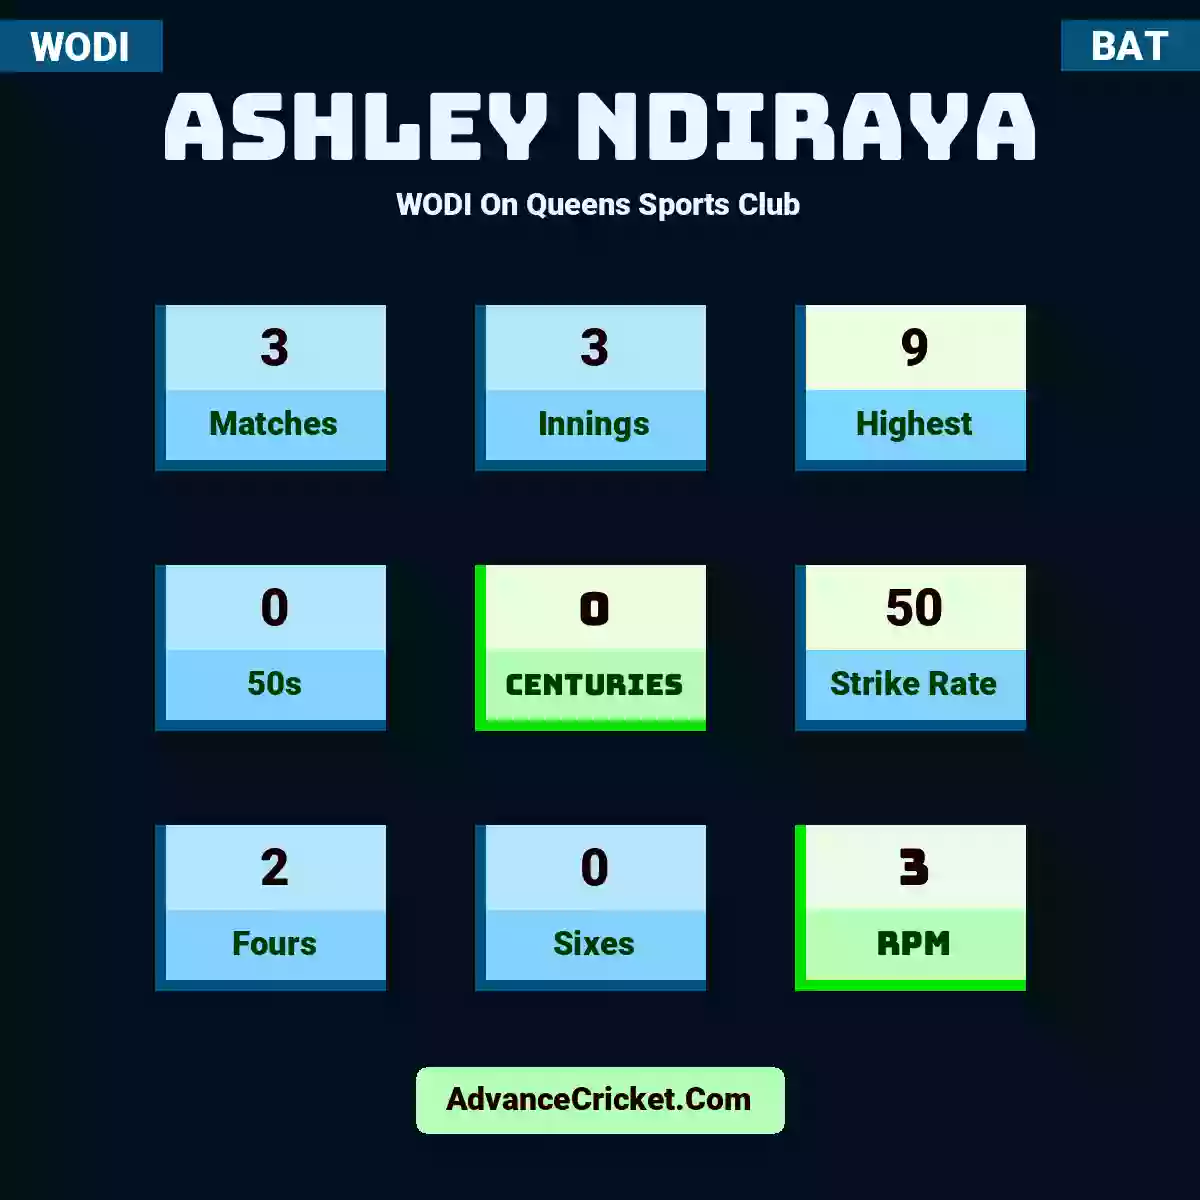 Ashley Ndiraya WODI  On Queens Sports Club, Ashley Ndiraya played 3 matches, scored 9 runs as highest, 0 half-centuries, and 0 centuries, with a strike rate of 50. A.Ndiraya hit 2 fours and 0 sixes, with an RPM of 3.